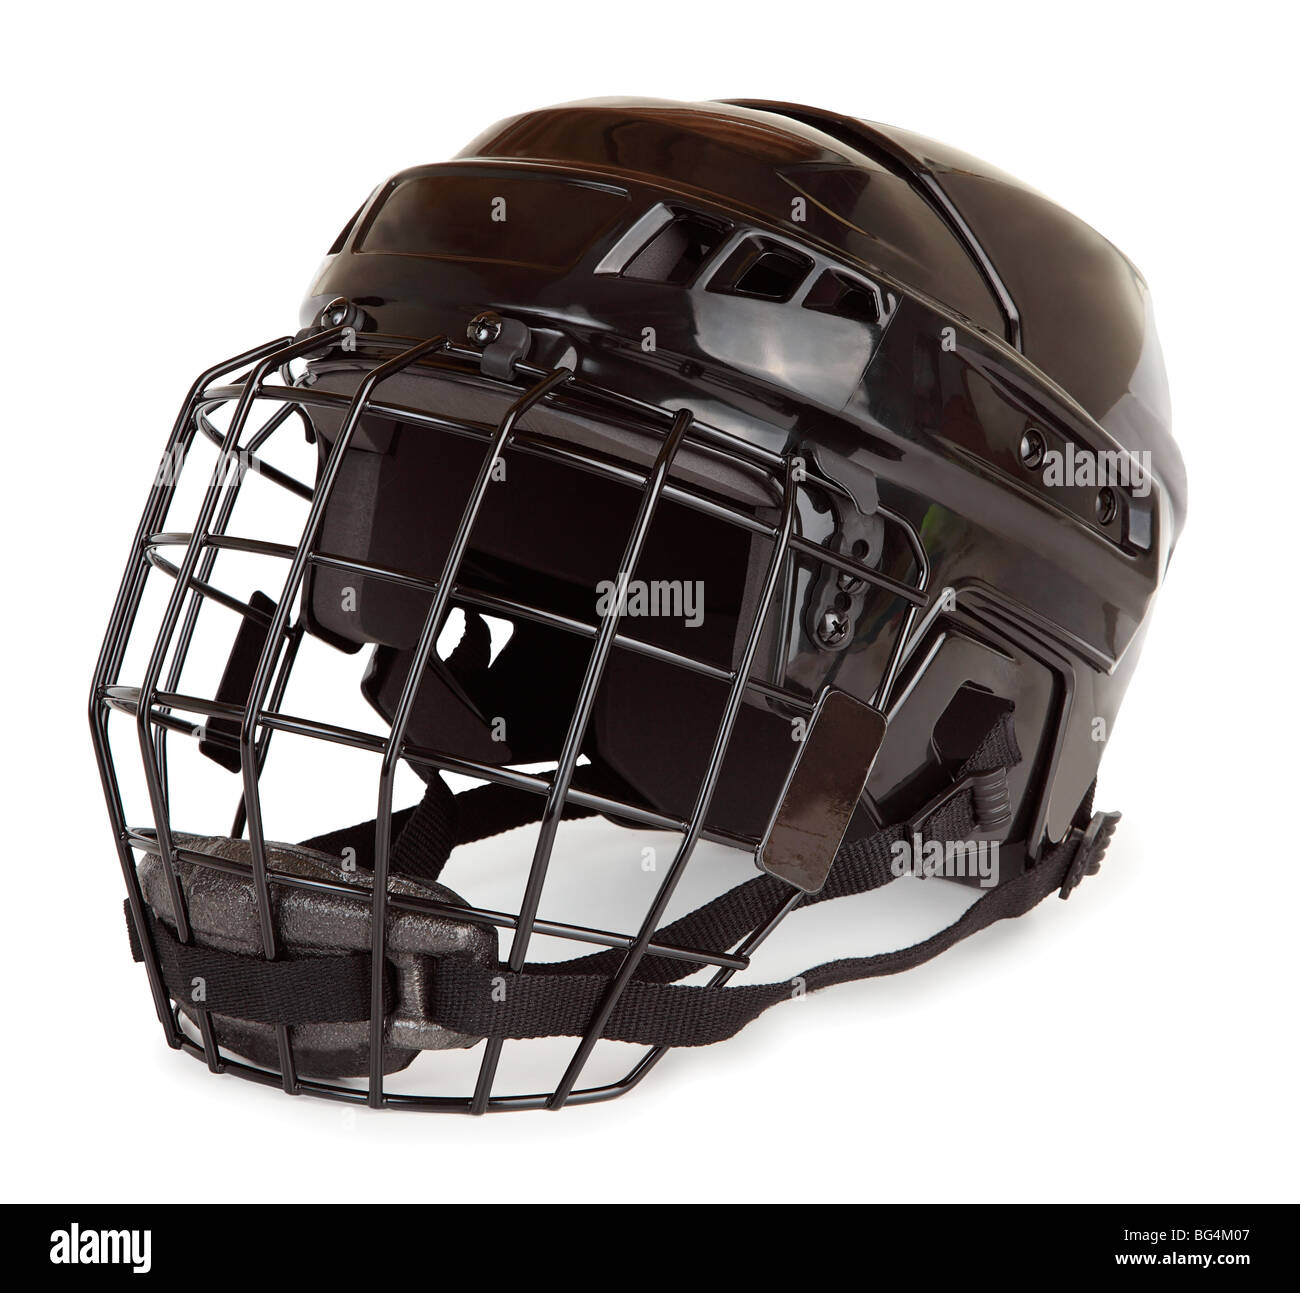 Hockey goalie mask hi-res stock photography and images - Alamy